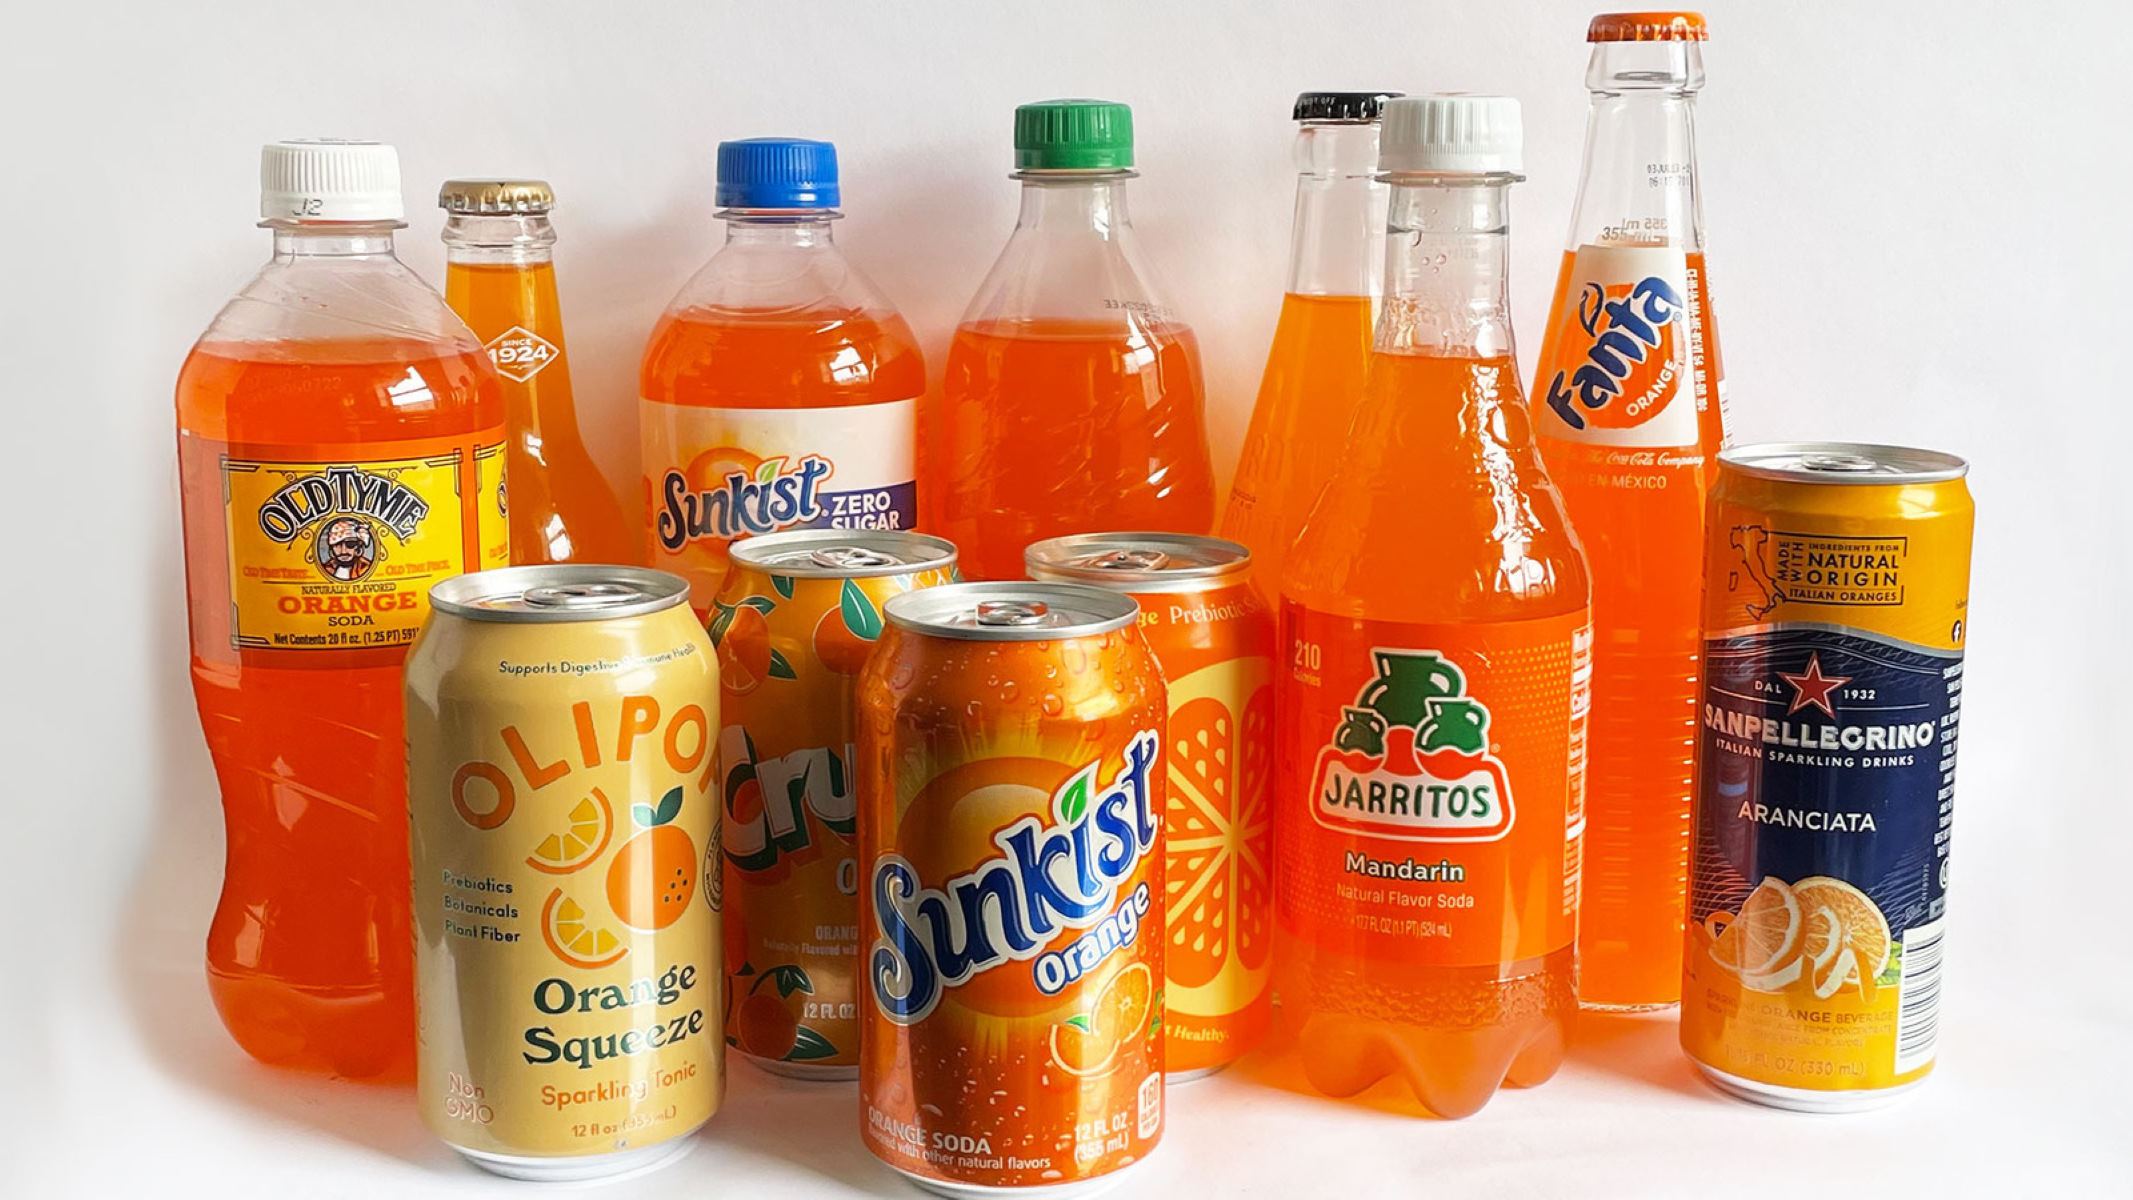 Top Orange Sodas With Caffeine - You Won't Believe #3!